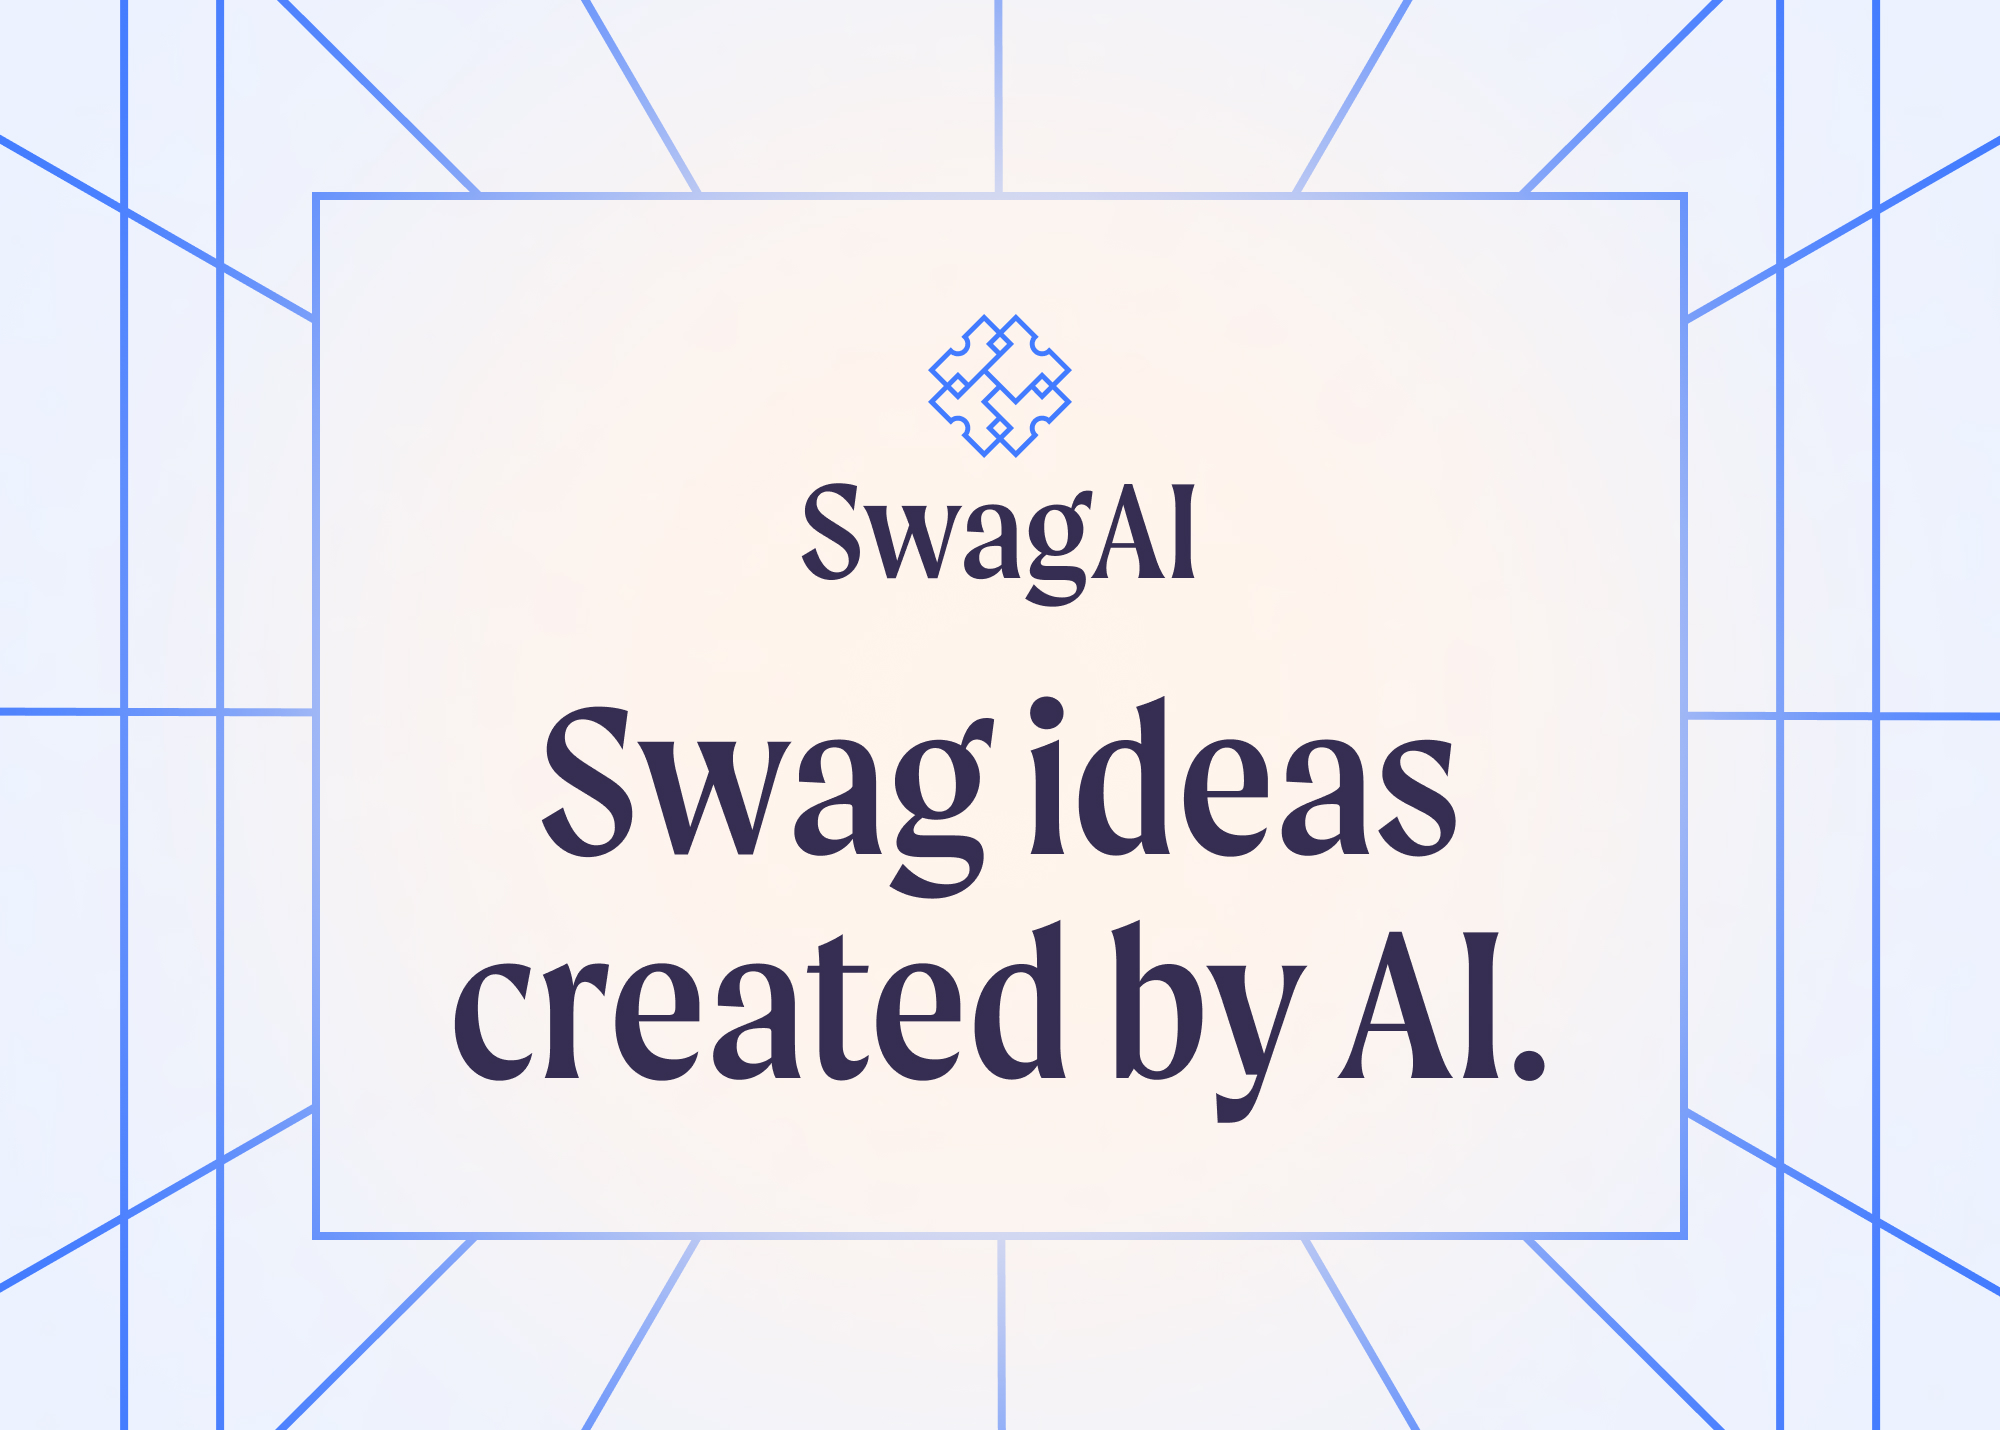 SwagAI - An AI-powered tool that generates custom swag ideas